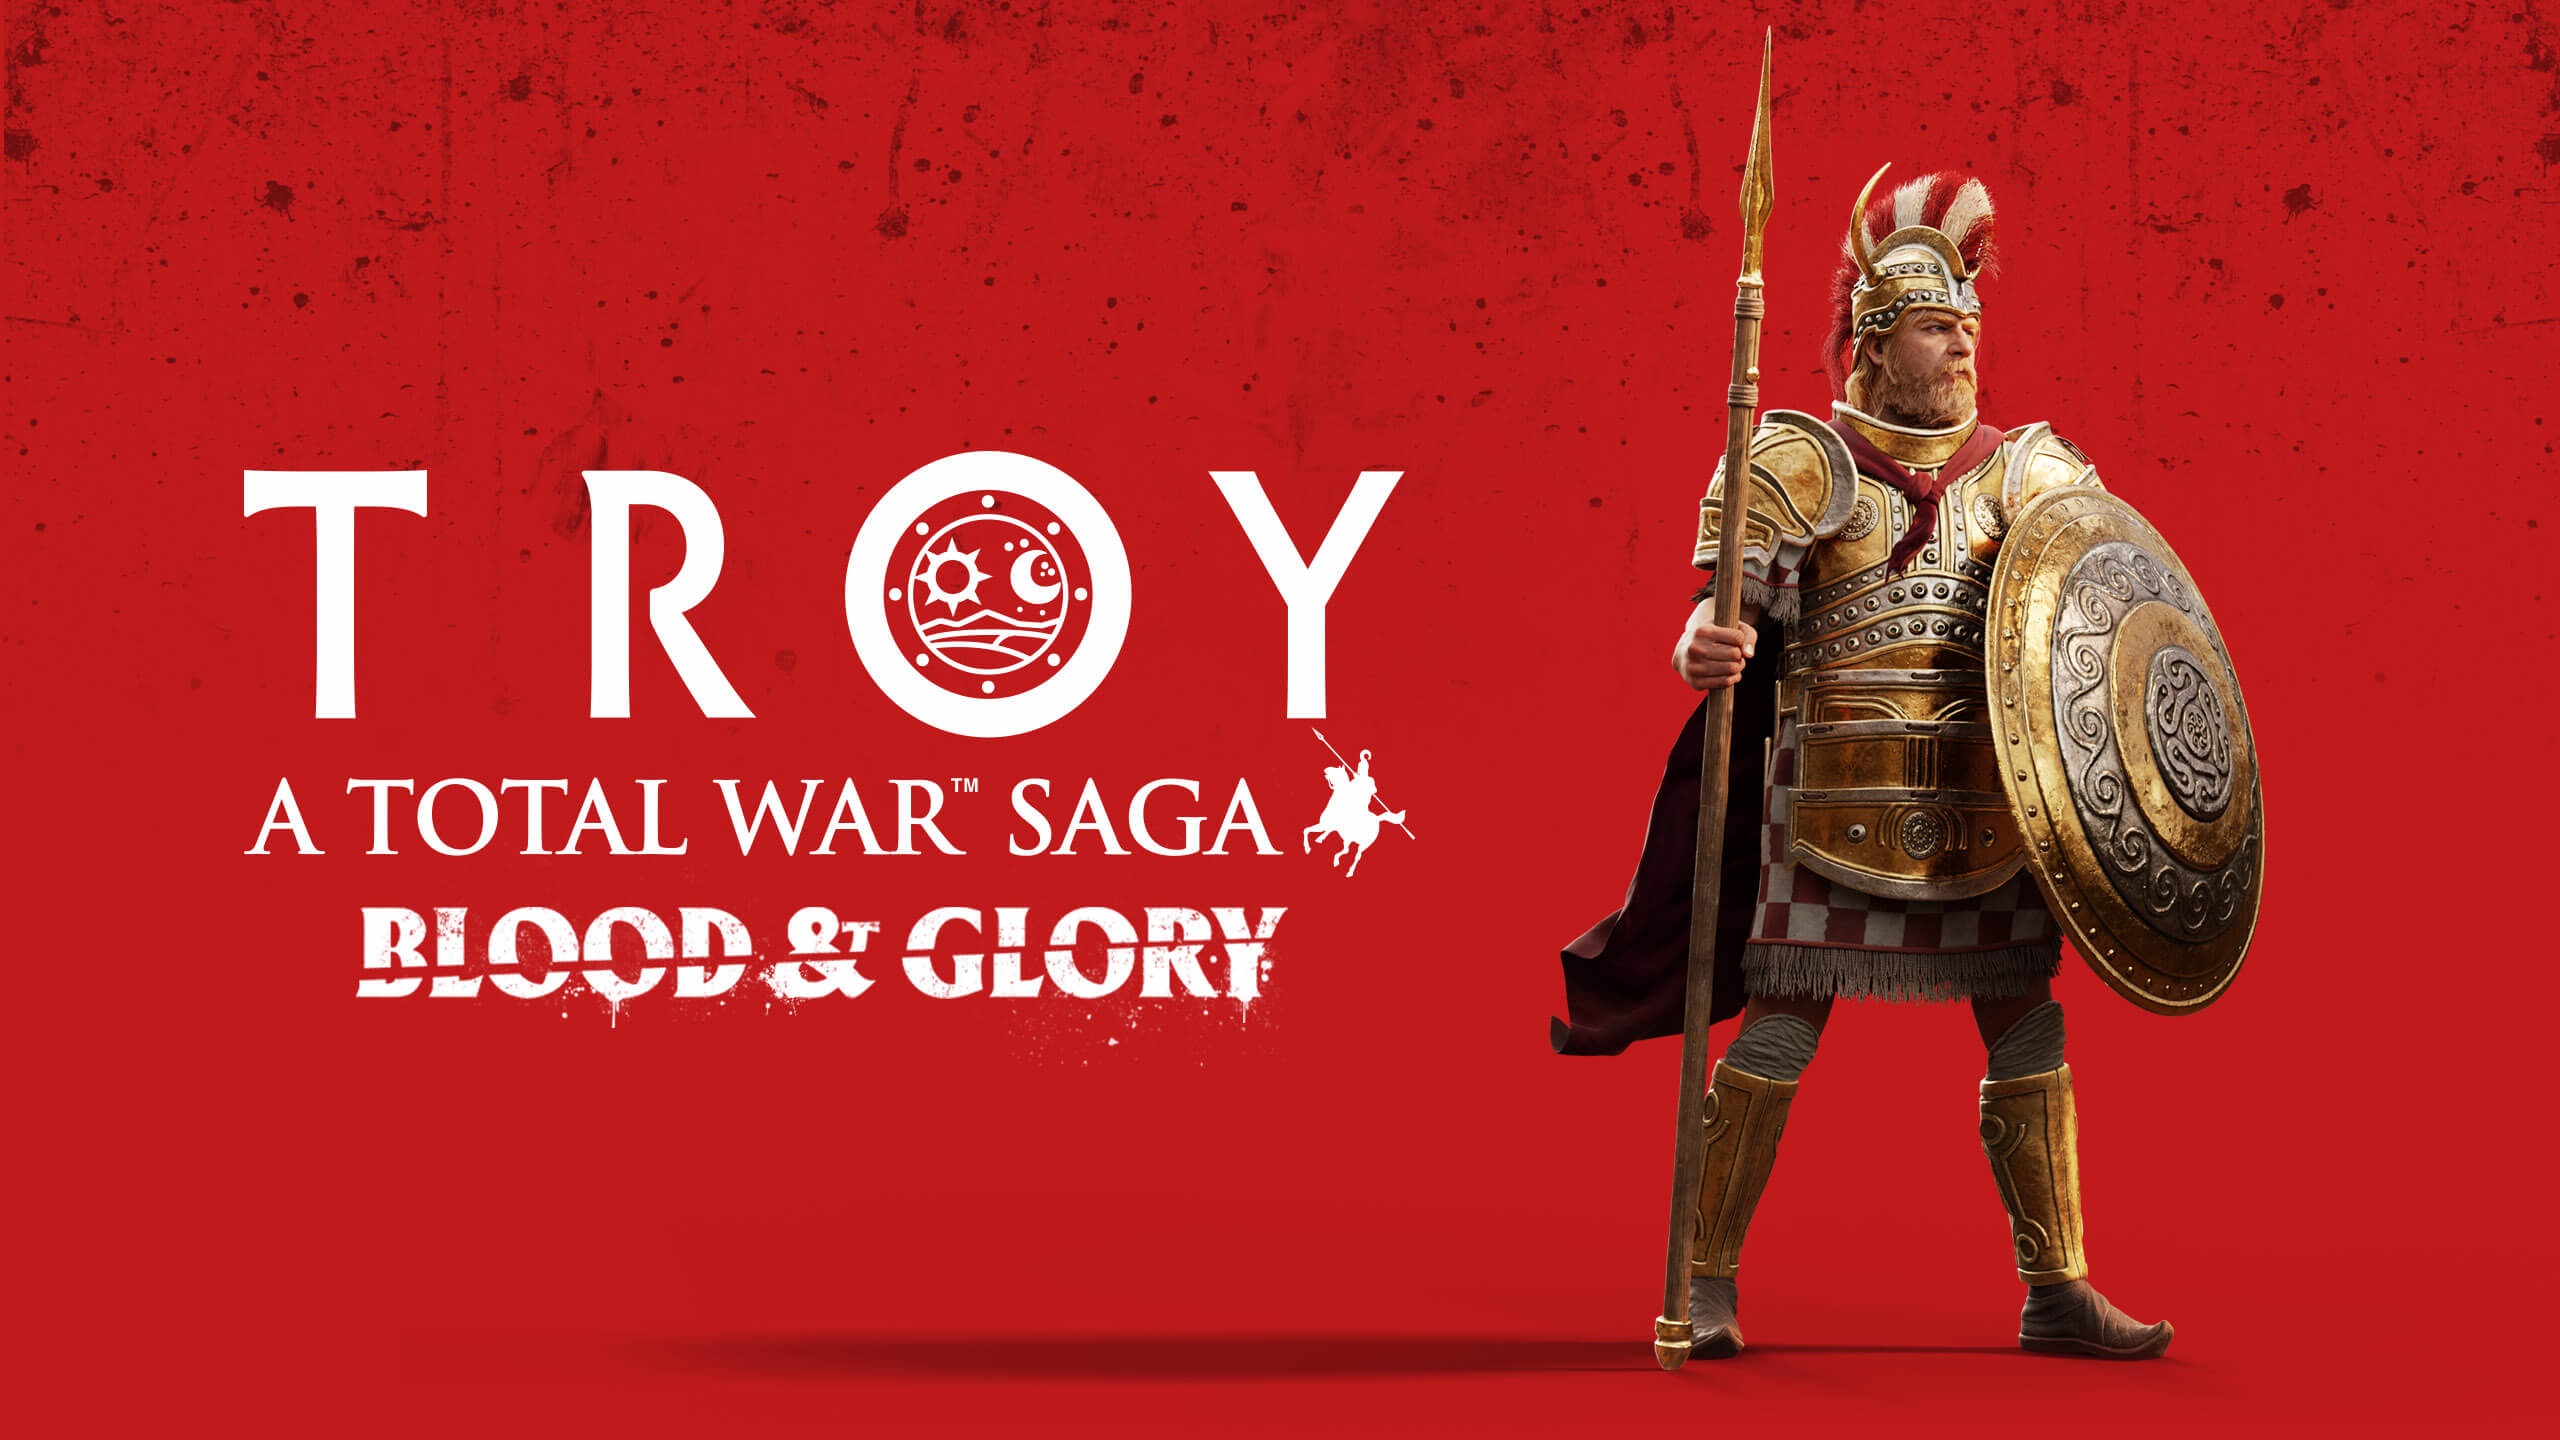 A Total War Saga: TROY - Blood & Glory